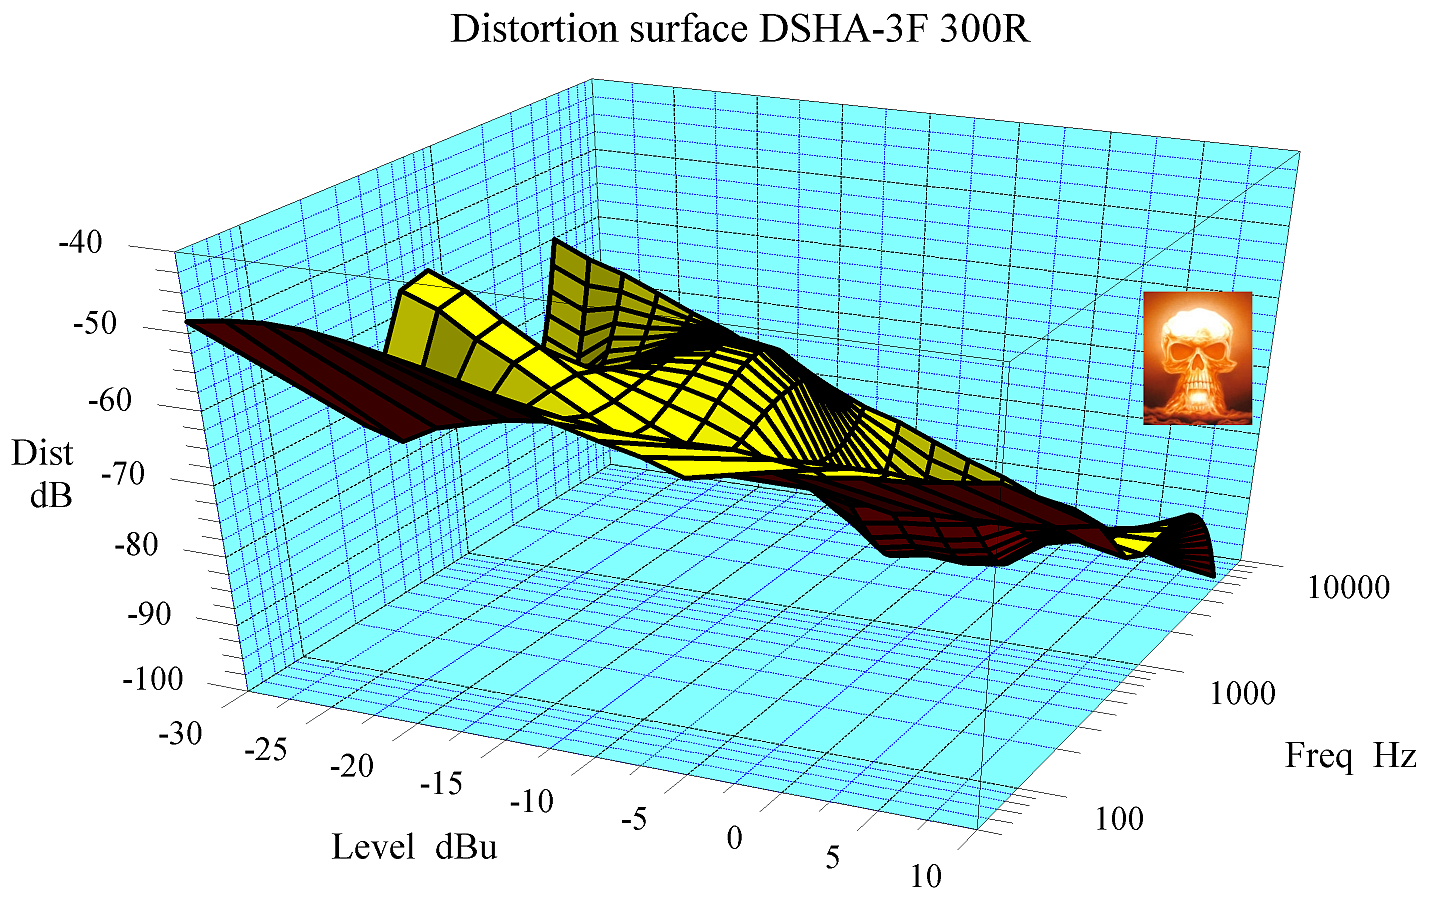 02 Distortion surface DSHA-3F 300R wm adj.png